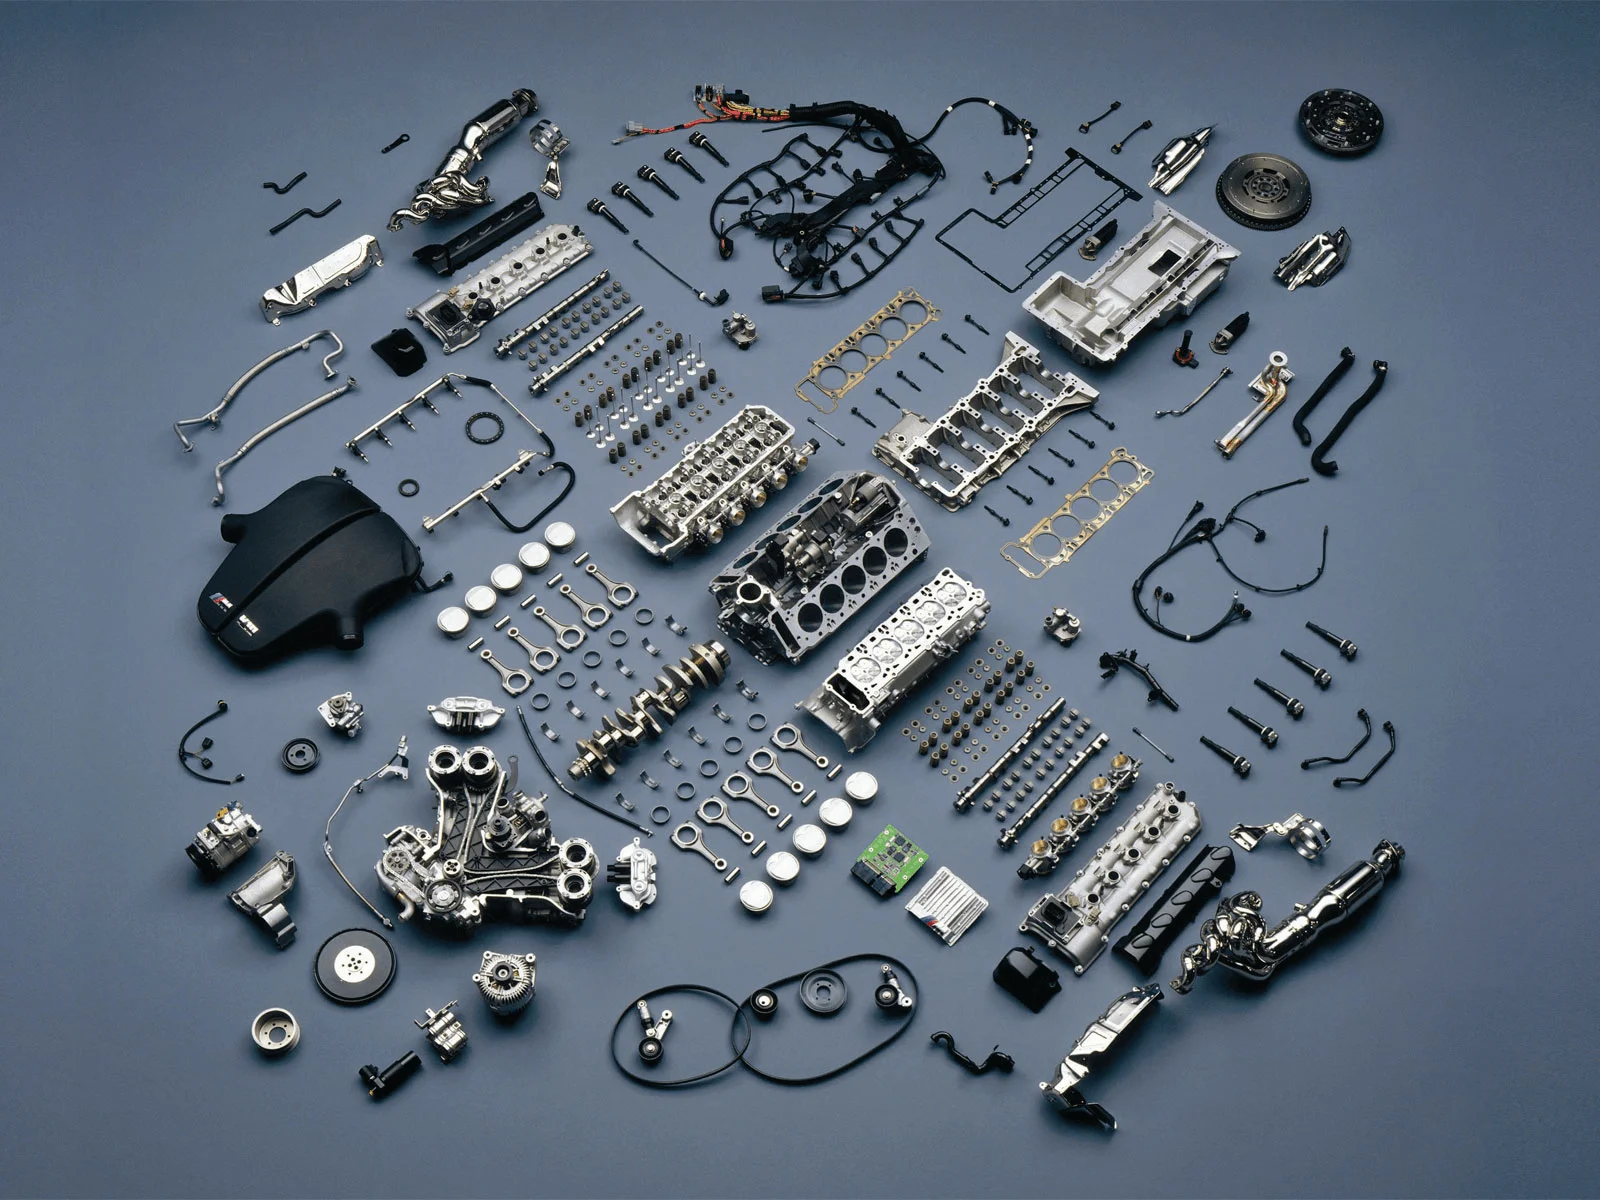 Engine Parts